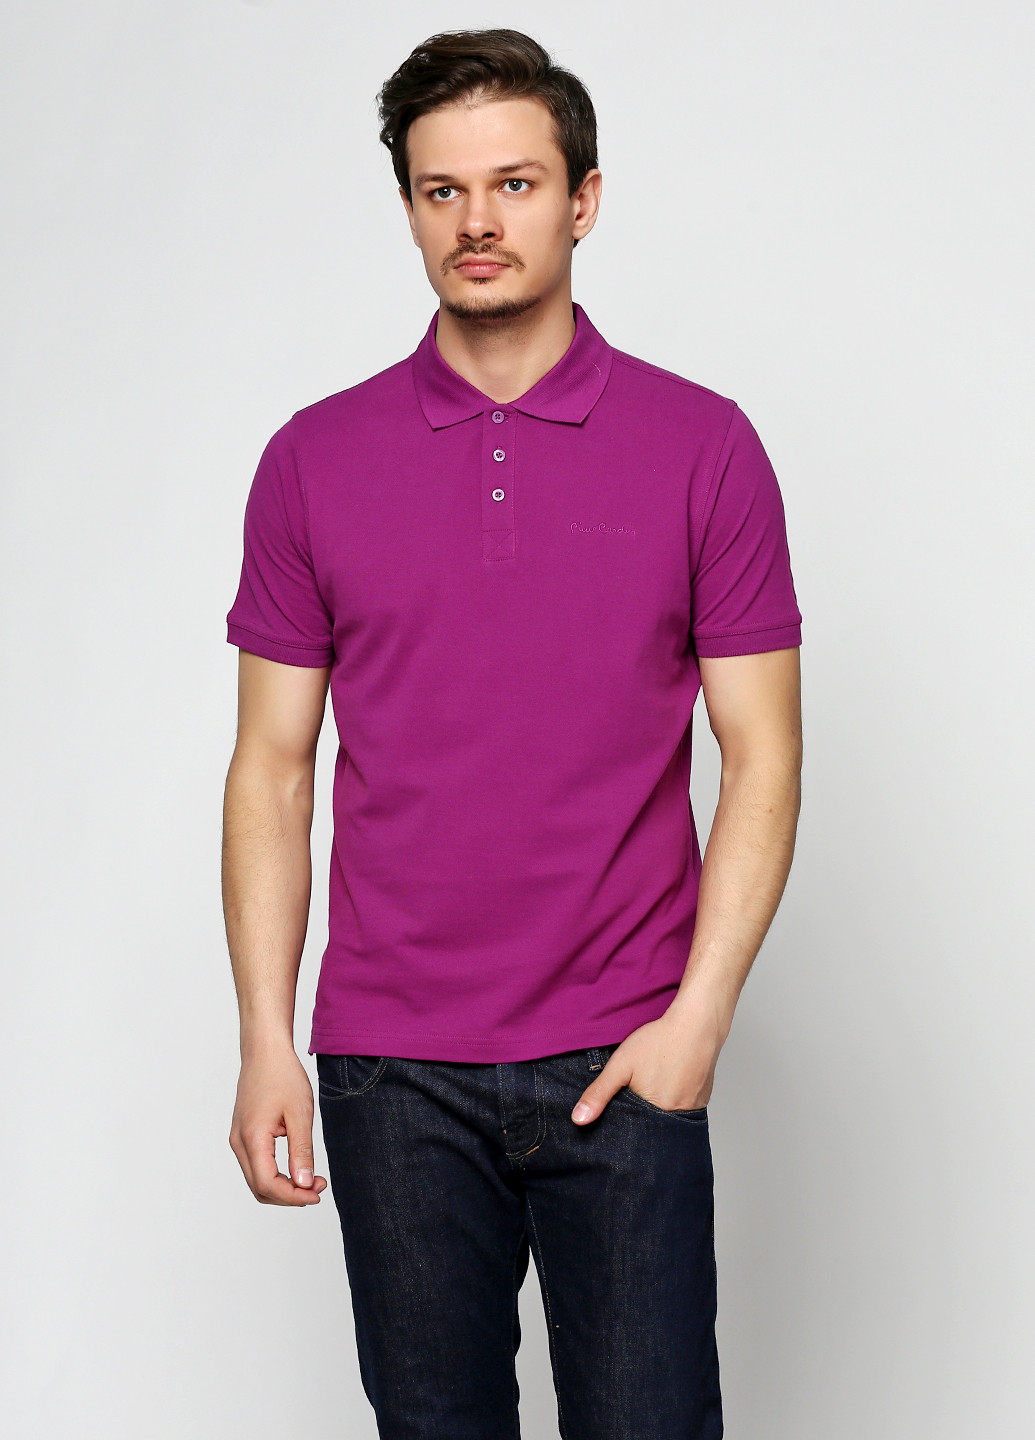 Фиолетовая футболка-поло для мужчин Pierre Cardin однотонная